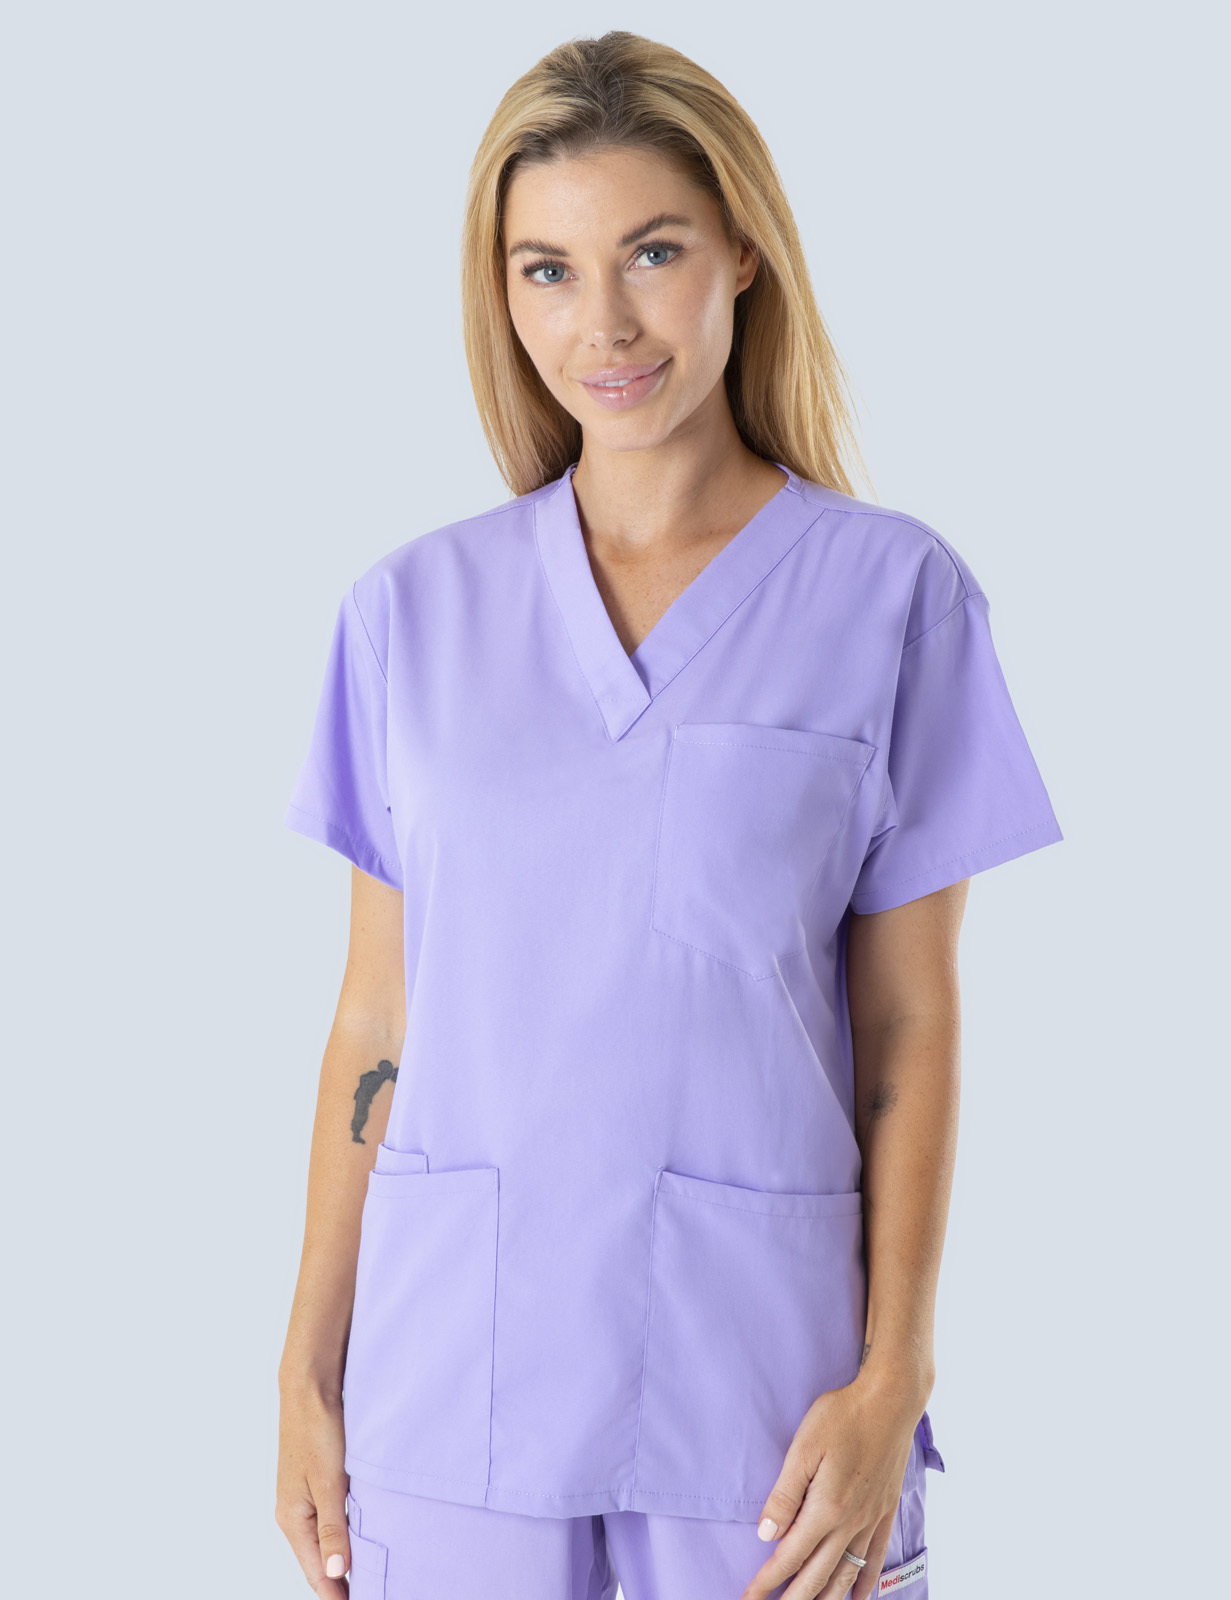 Queensland Children's Hospital Emergency Department Enrolled Nurse Uniform Top Bundle  (4 Pocket Top  in Lilac incl Logos)